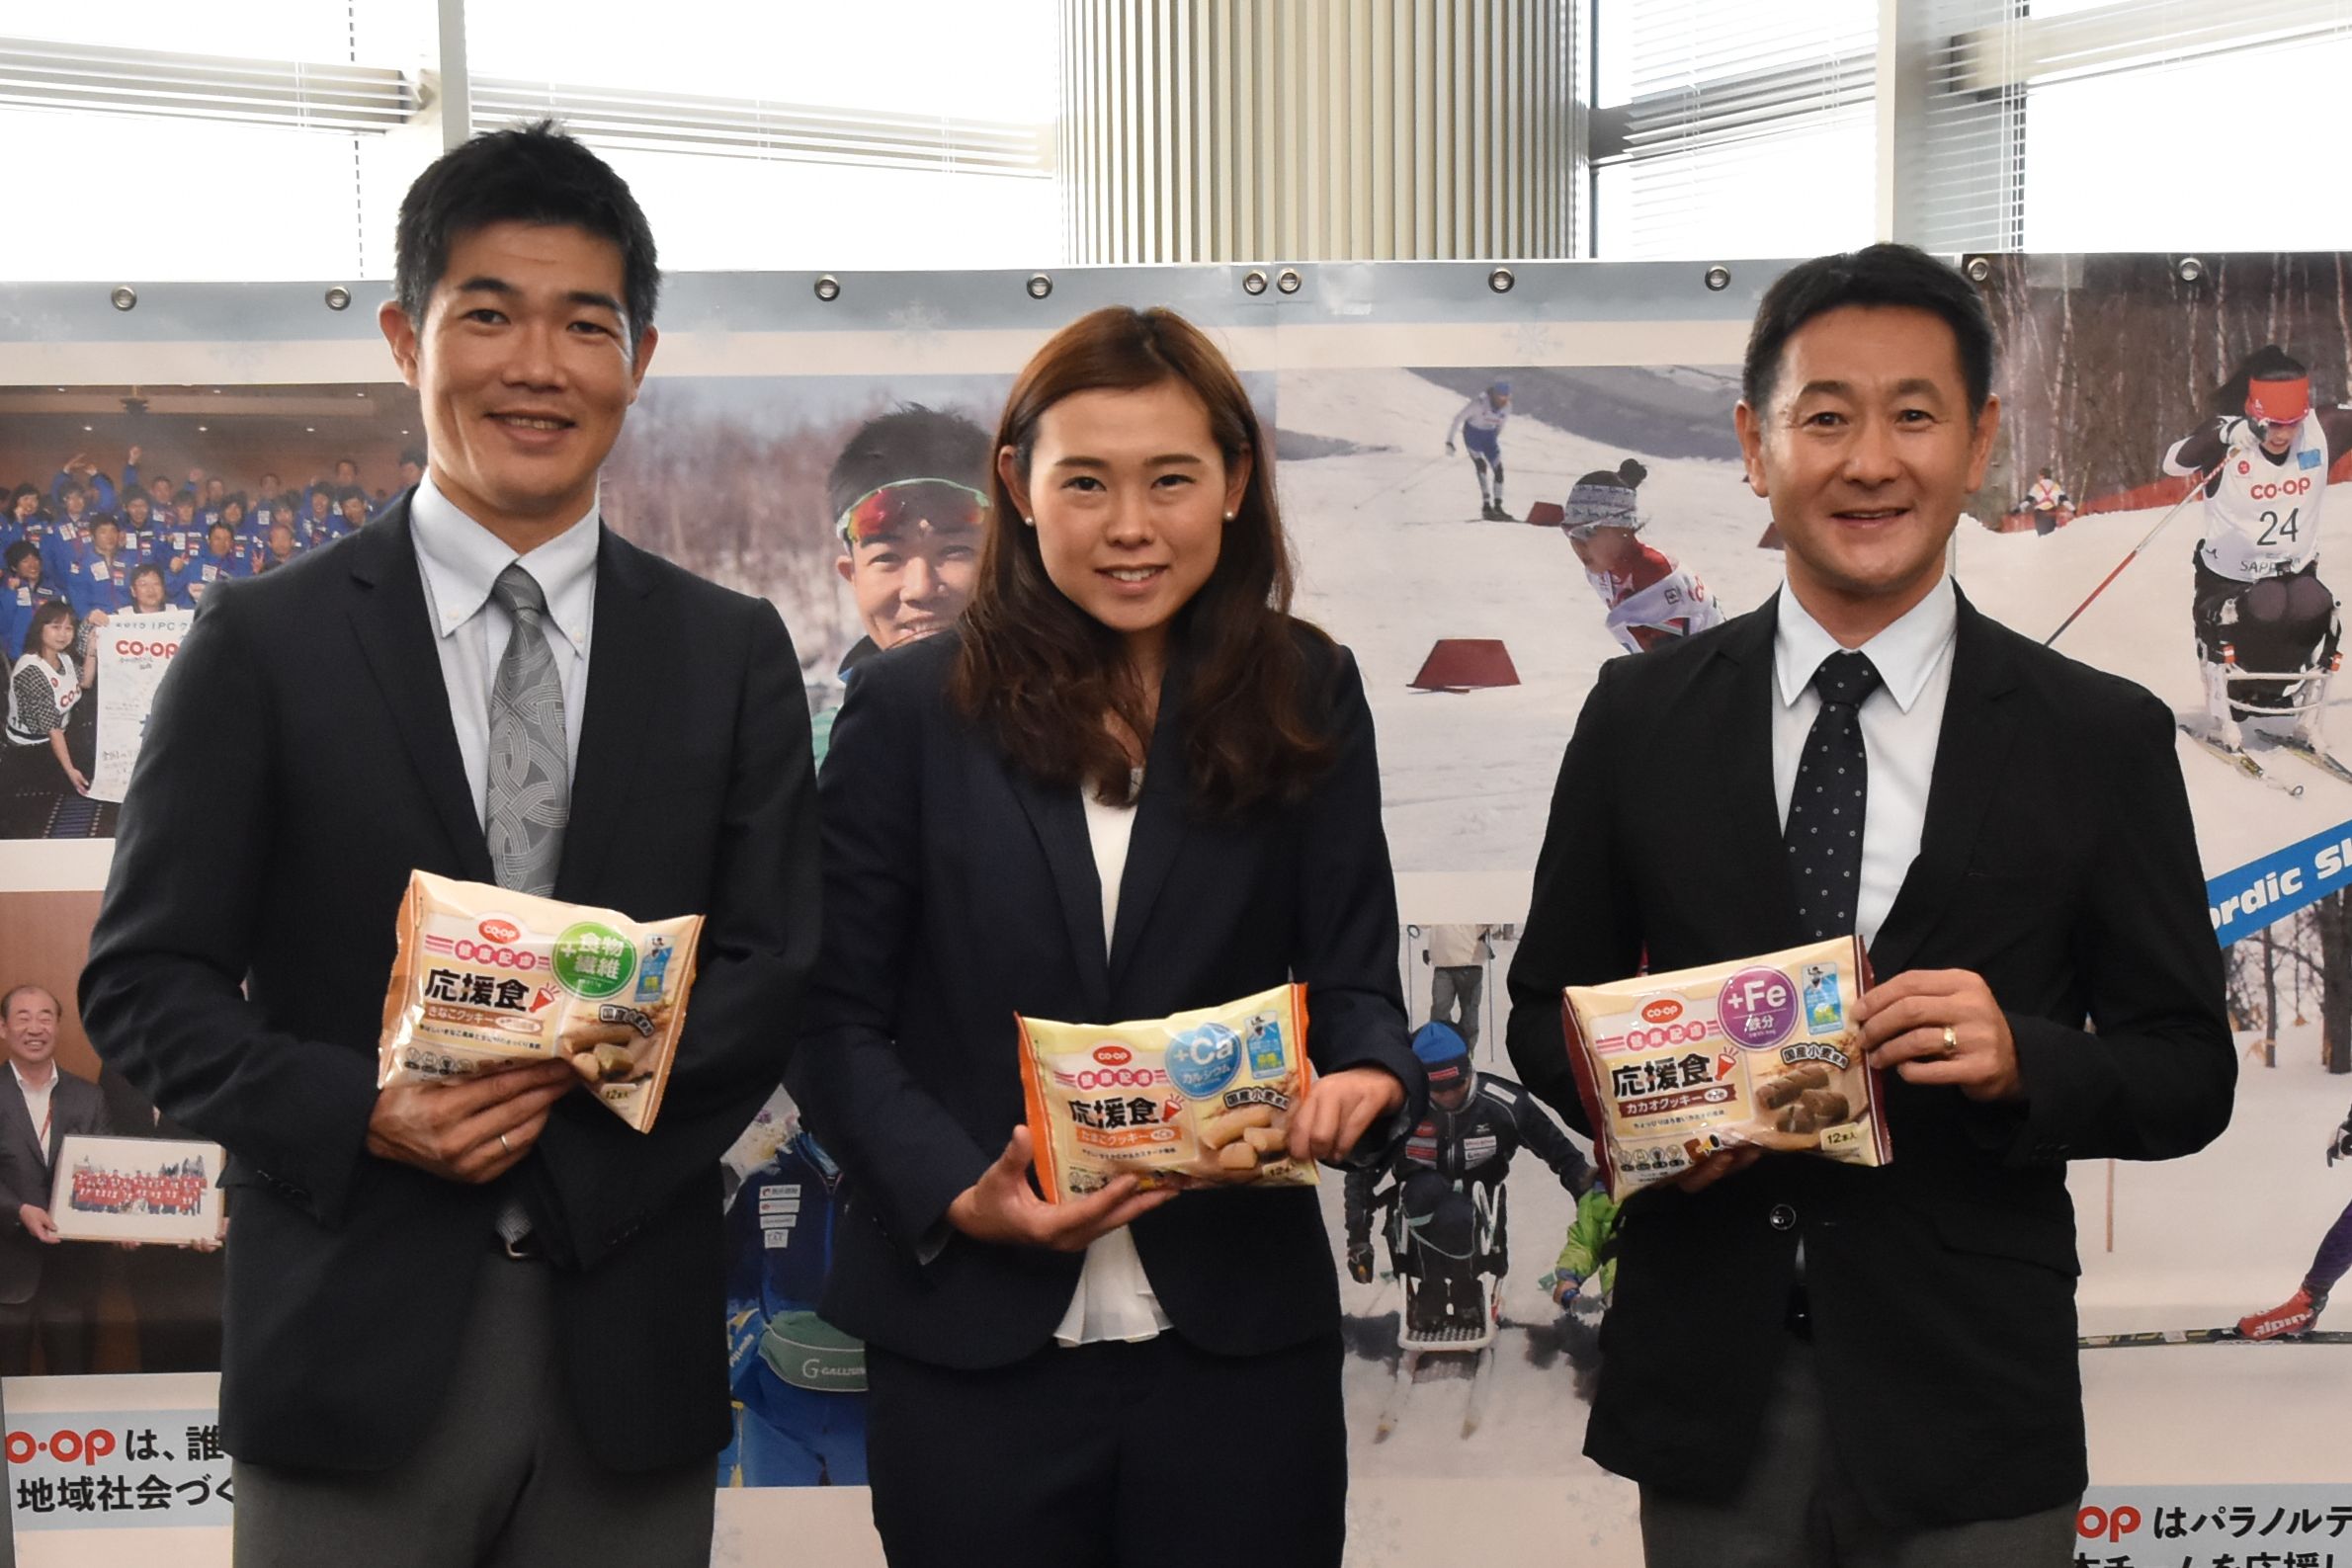 JCCU Supports Para Nordic Skiing Japan Team